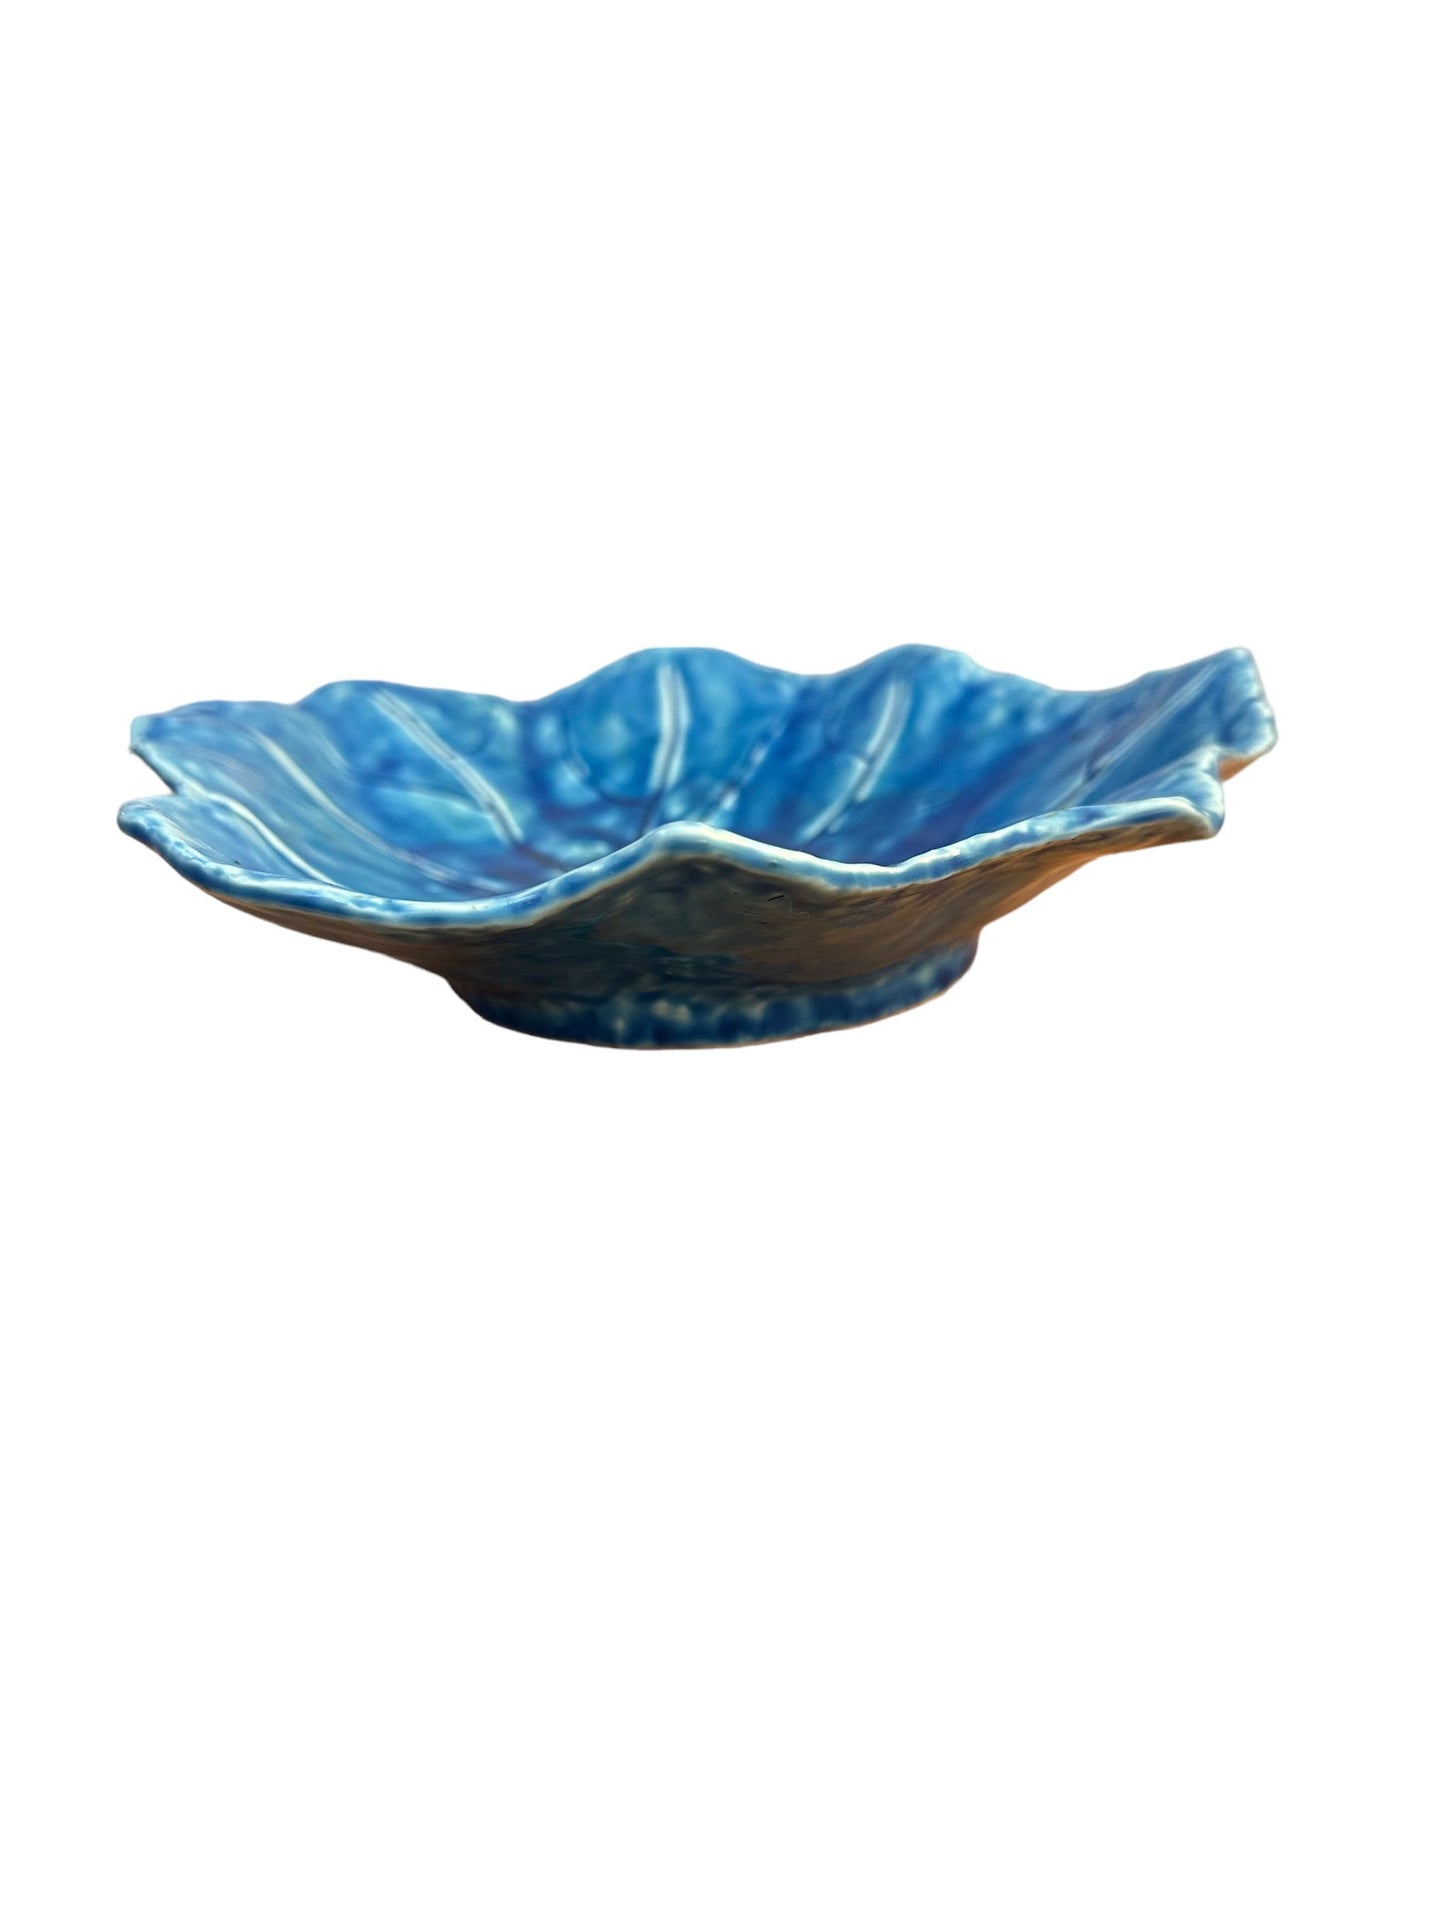 Japanese ceramic, Aqua blue leaf design saucer for medium to large kokedama